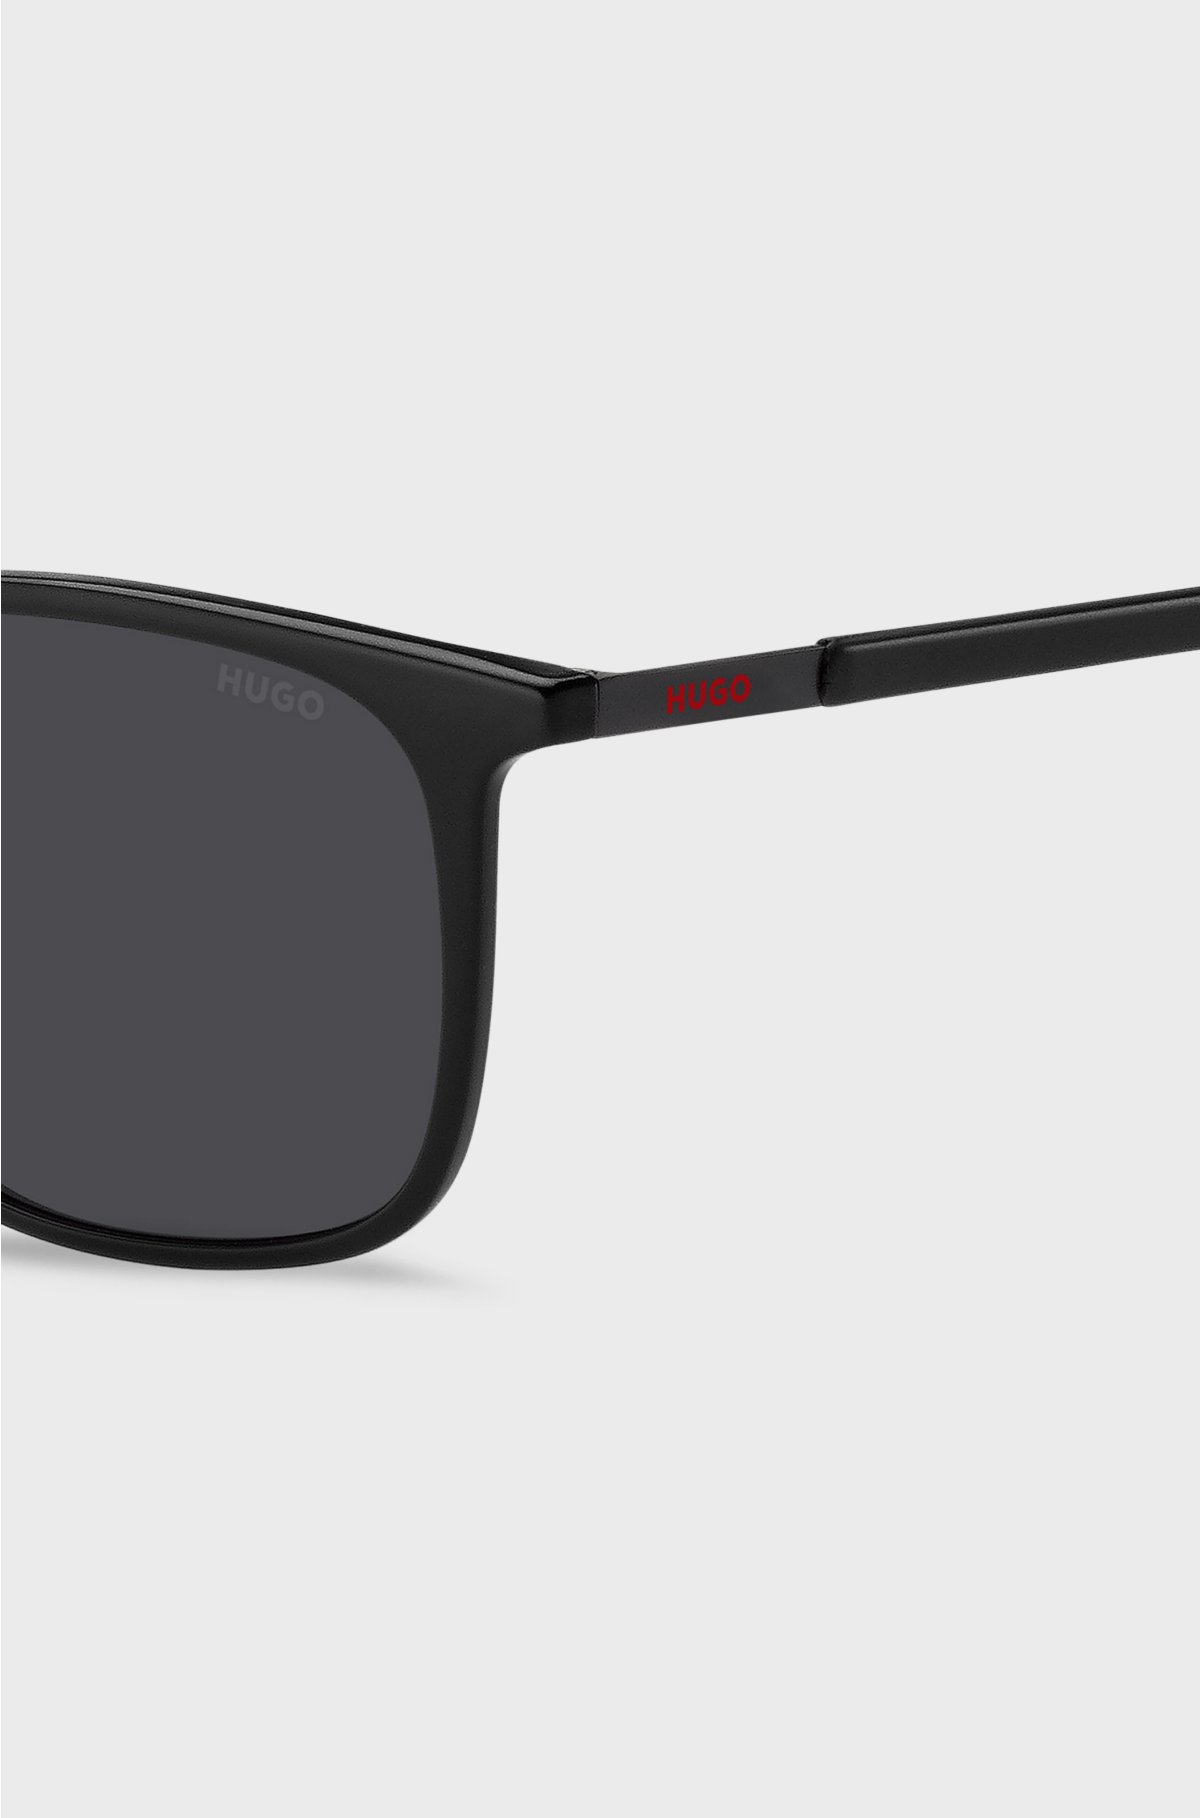 Black sunglasses with signature-red details, Black